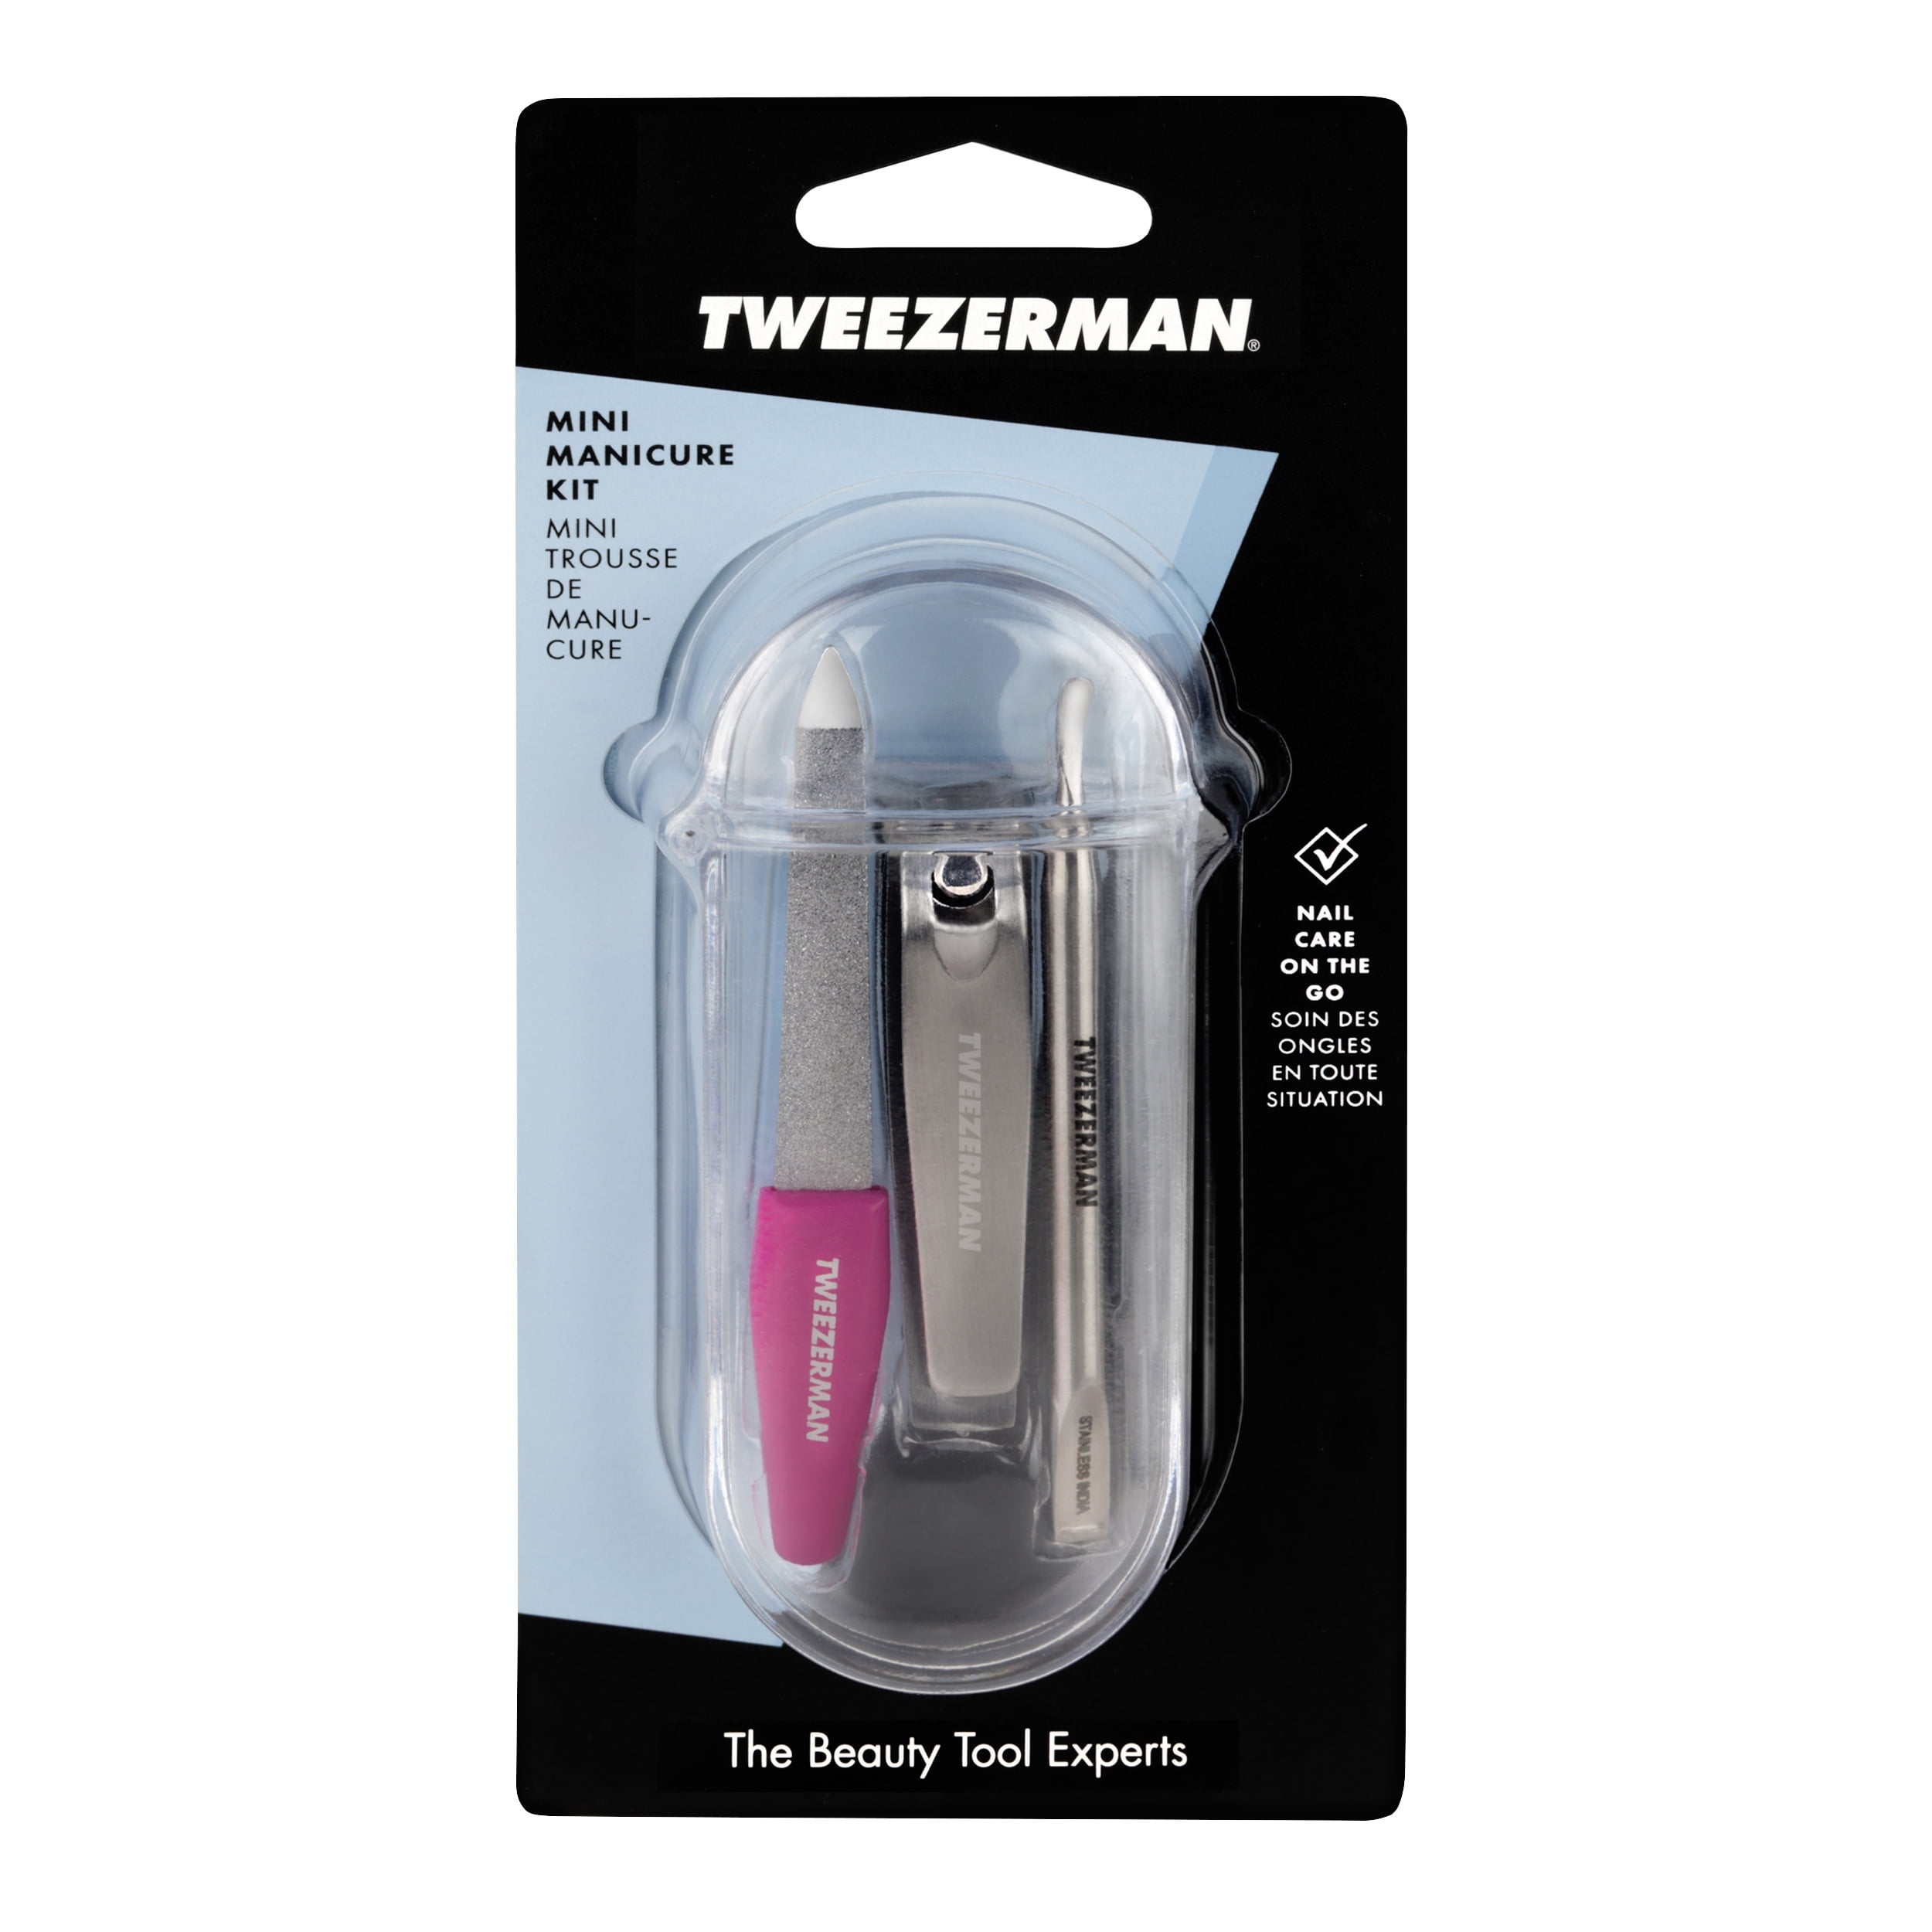 Tweezerman Mini Manicure Nail & Kit Nail File Pushy Nail with Clipper, a